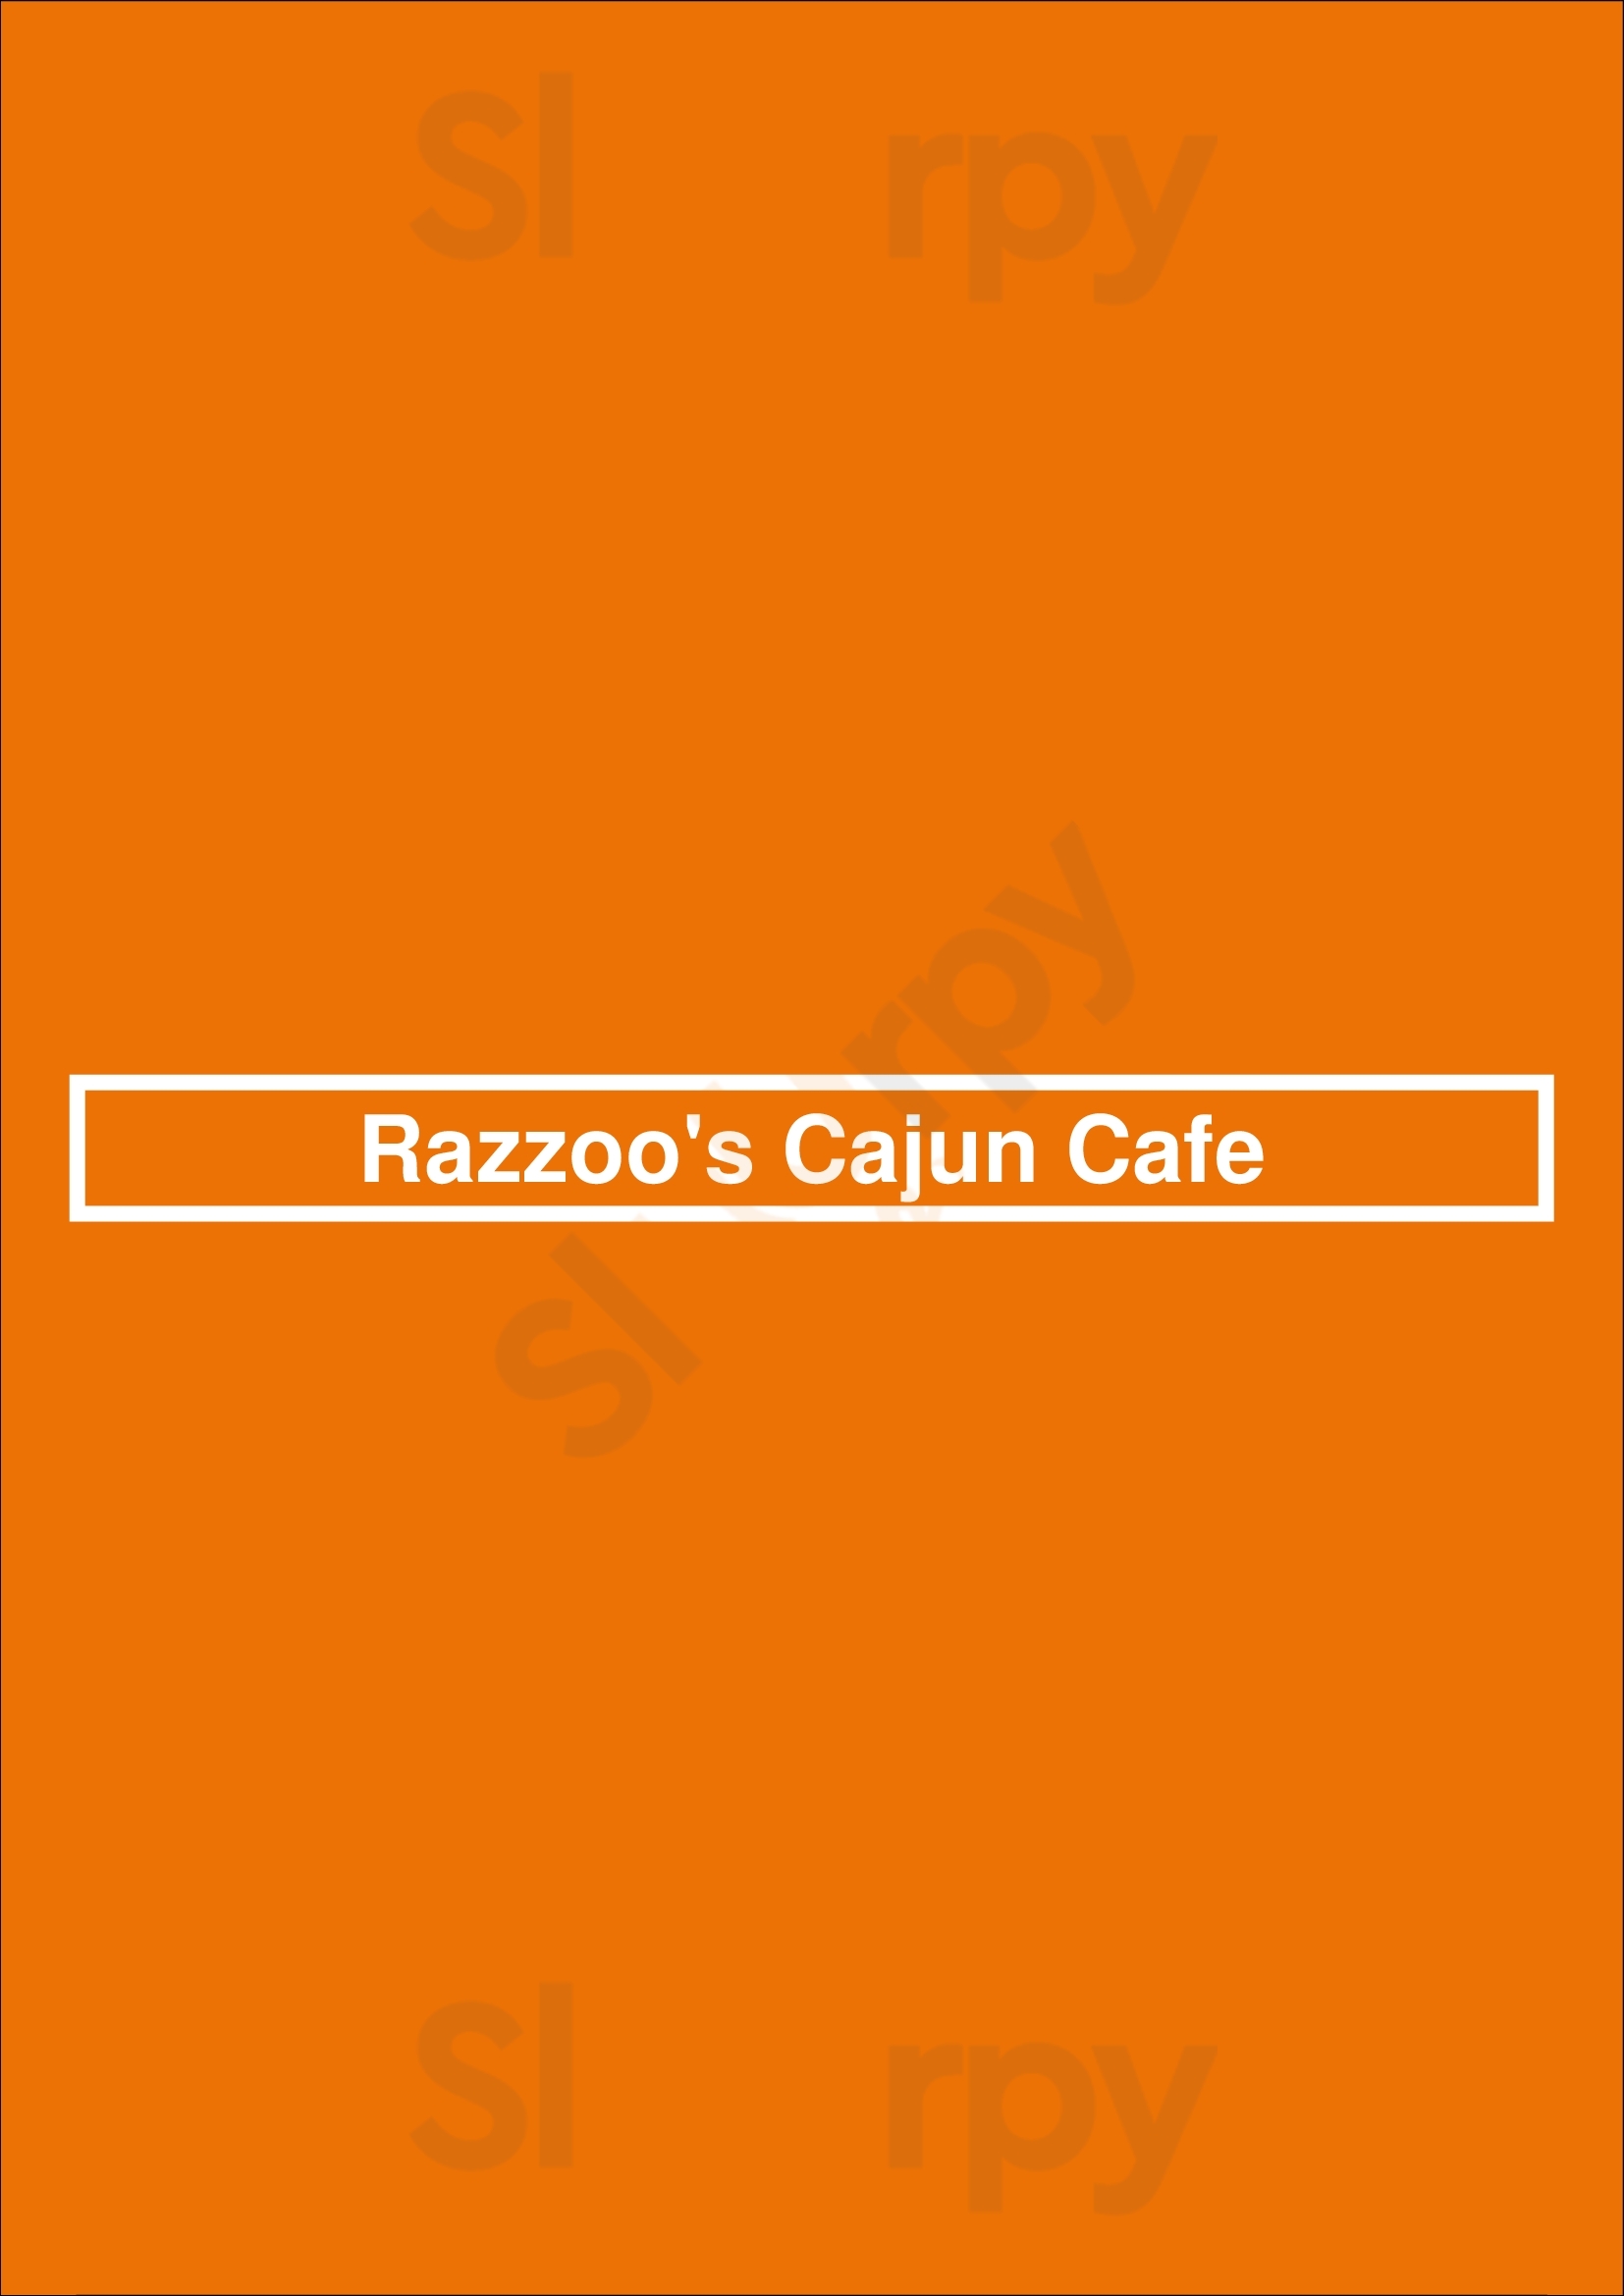 Razzoo's Cajun Cafe Dallas Menu - 1